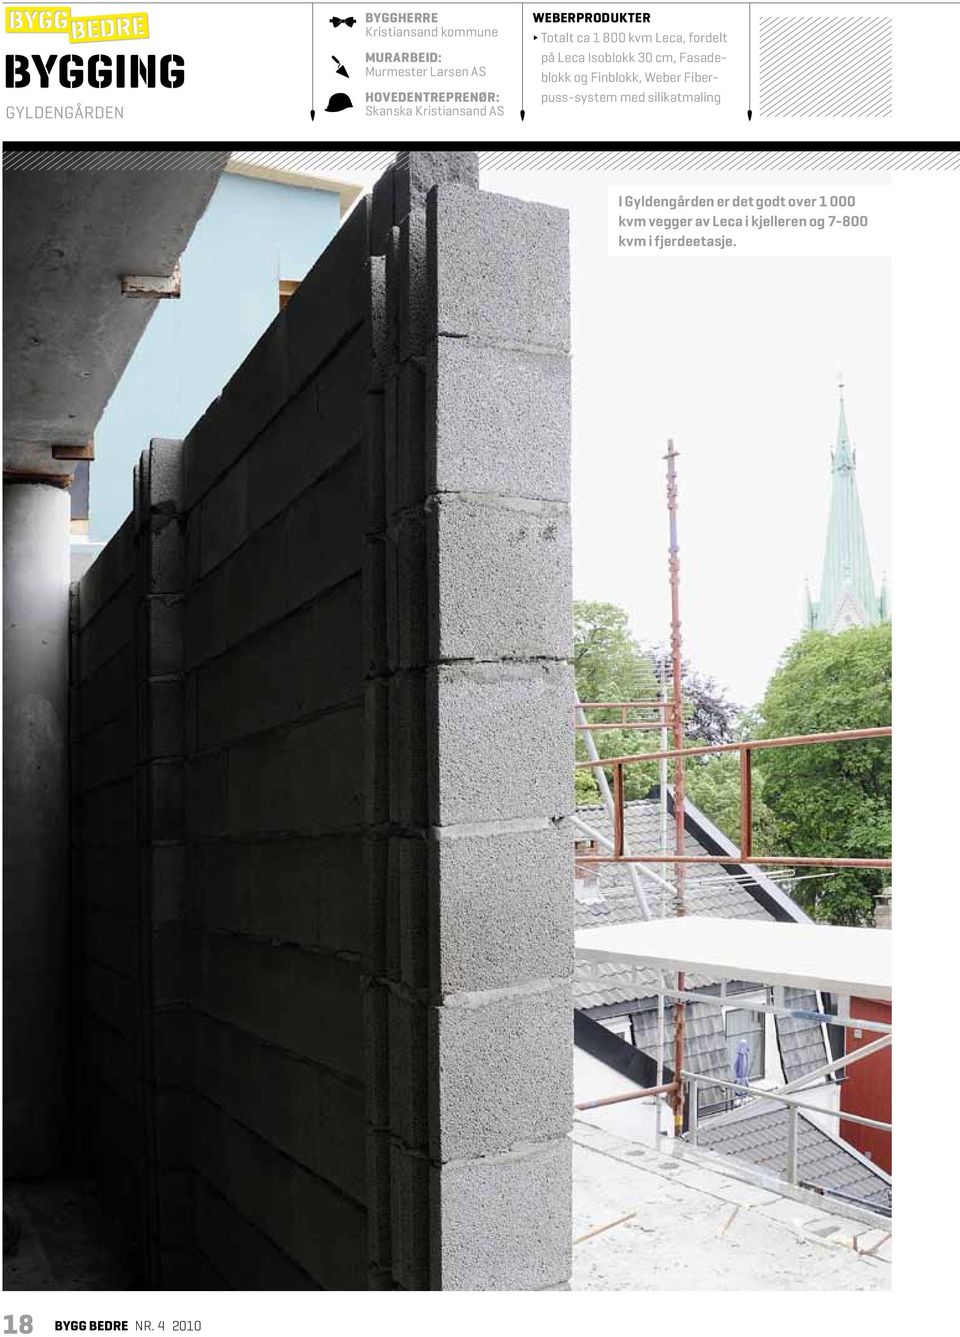 Leca Isoblokk 30 cm, Fasadeblokk og Finblokk, Weber Fiberpuss-system med silikatmaling I